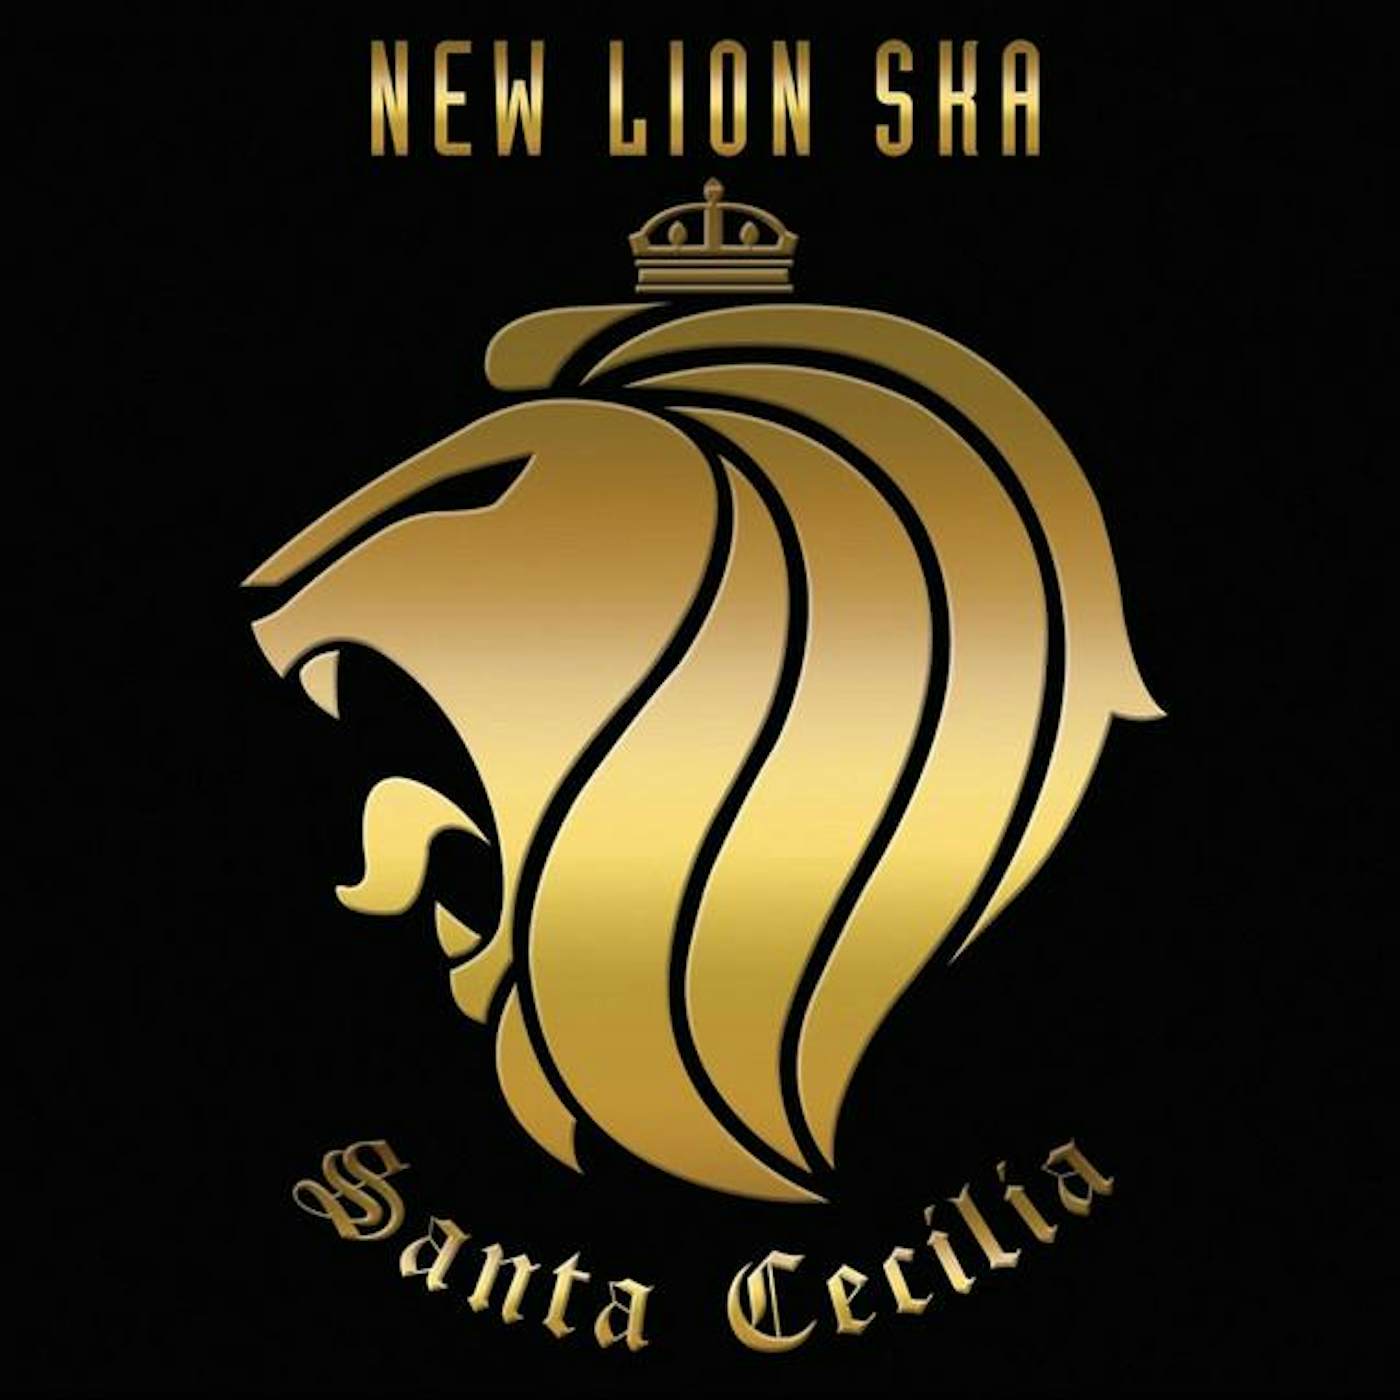 New Lion Ska